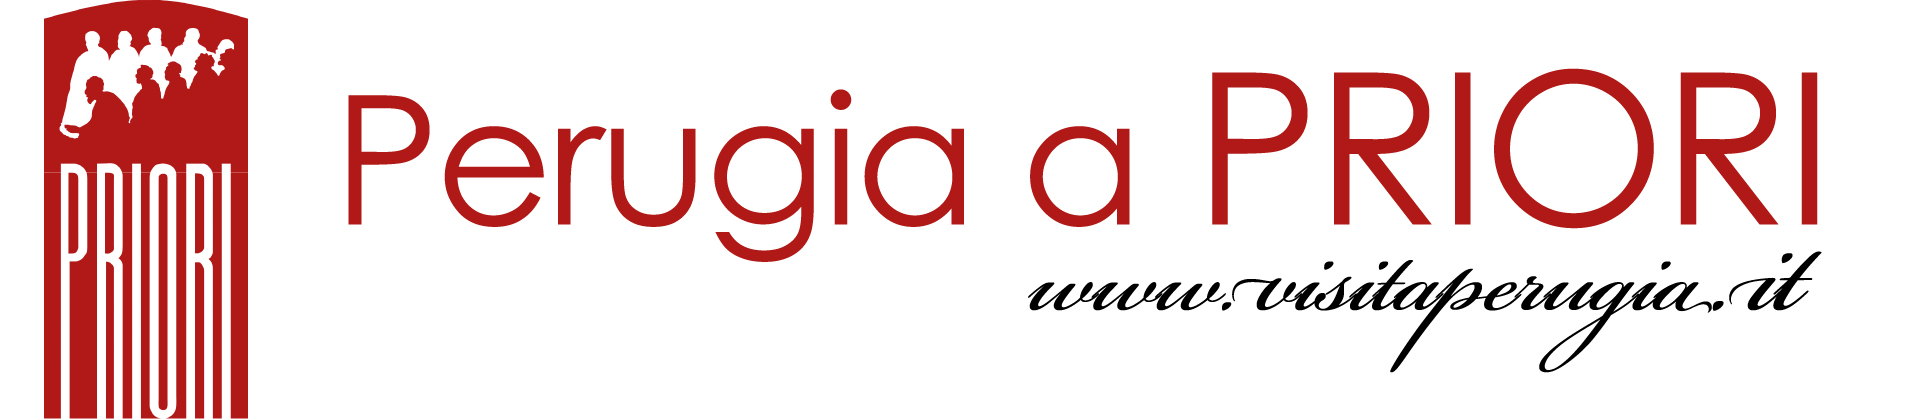 Visita Perugia… a Priori Logo